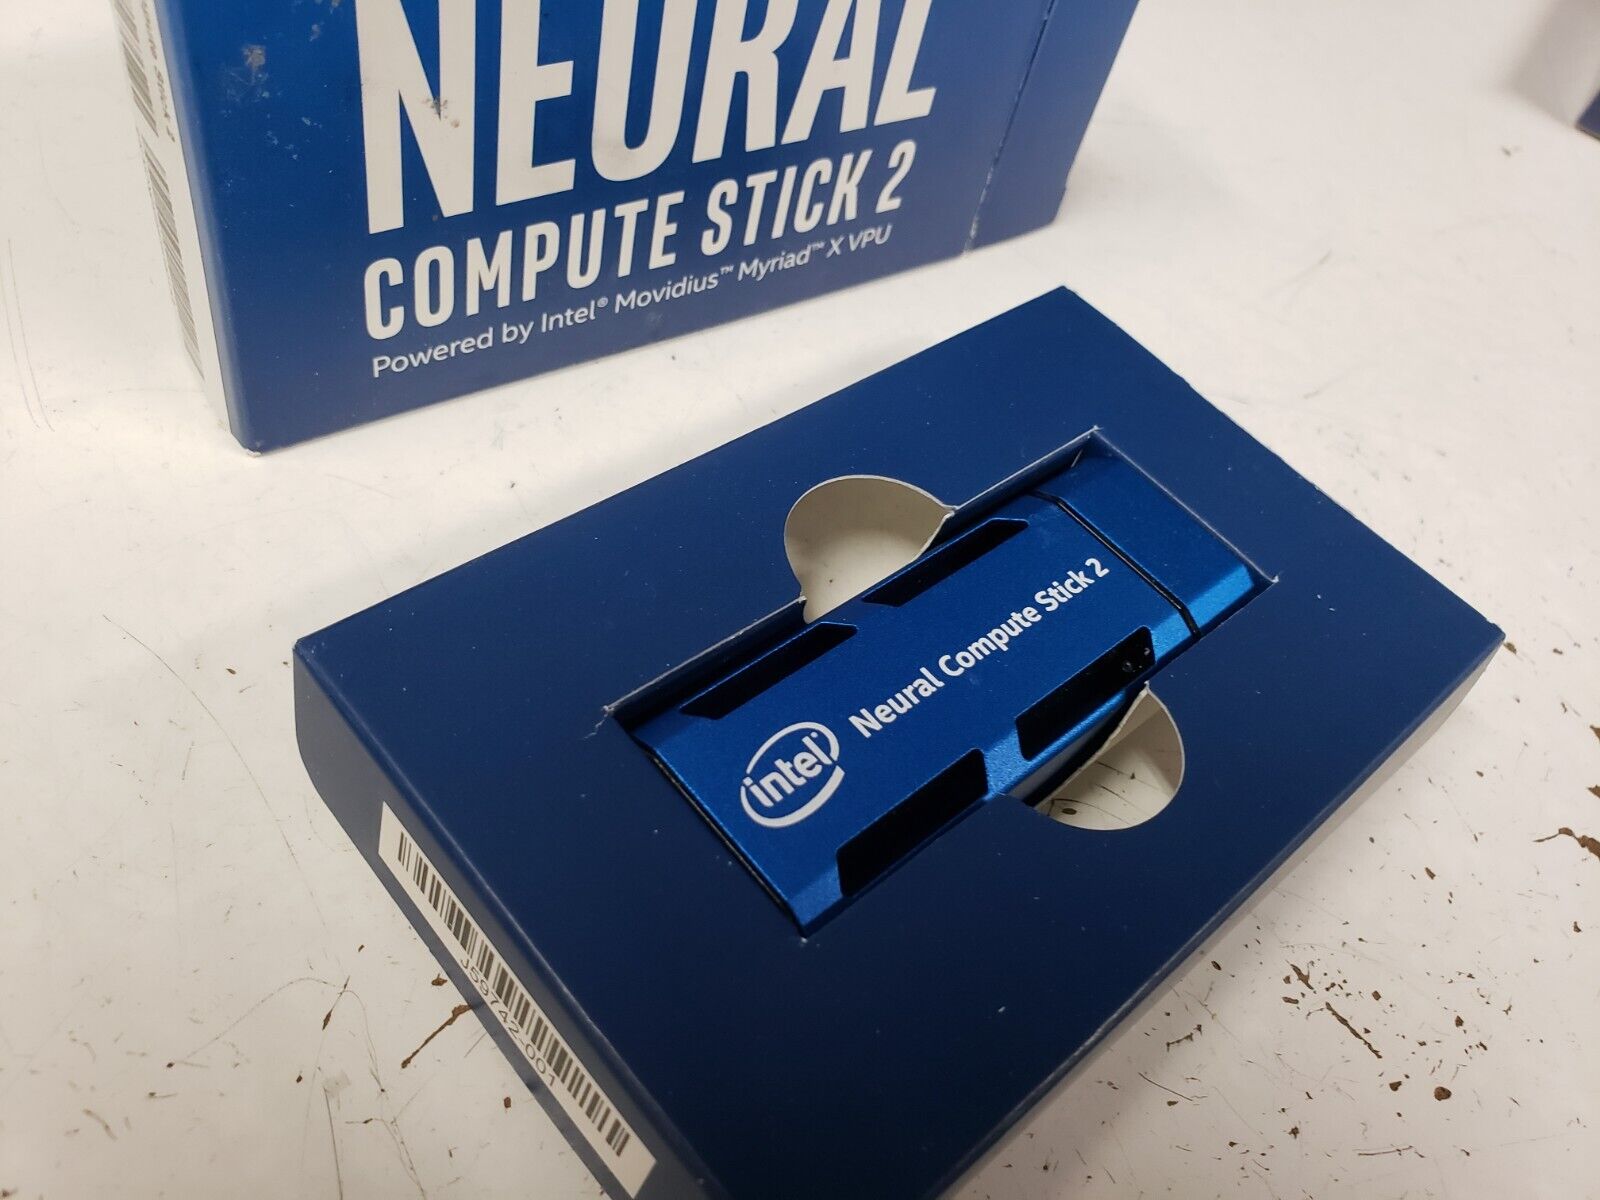 Intel NCSM2485 DK Movidius Neural Compute Stick 2 Myriad X VPU